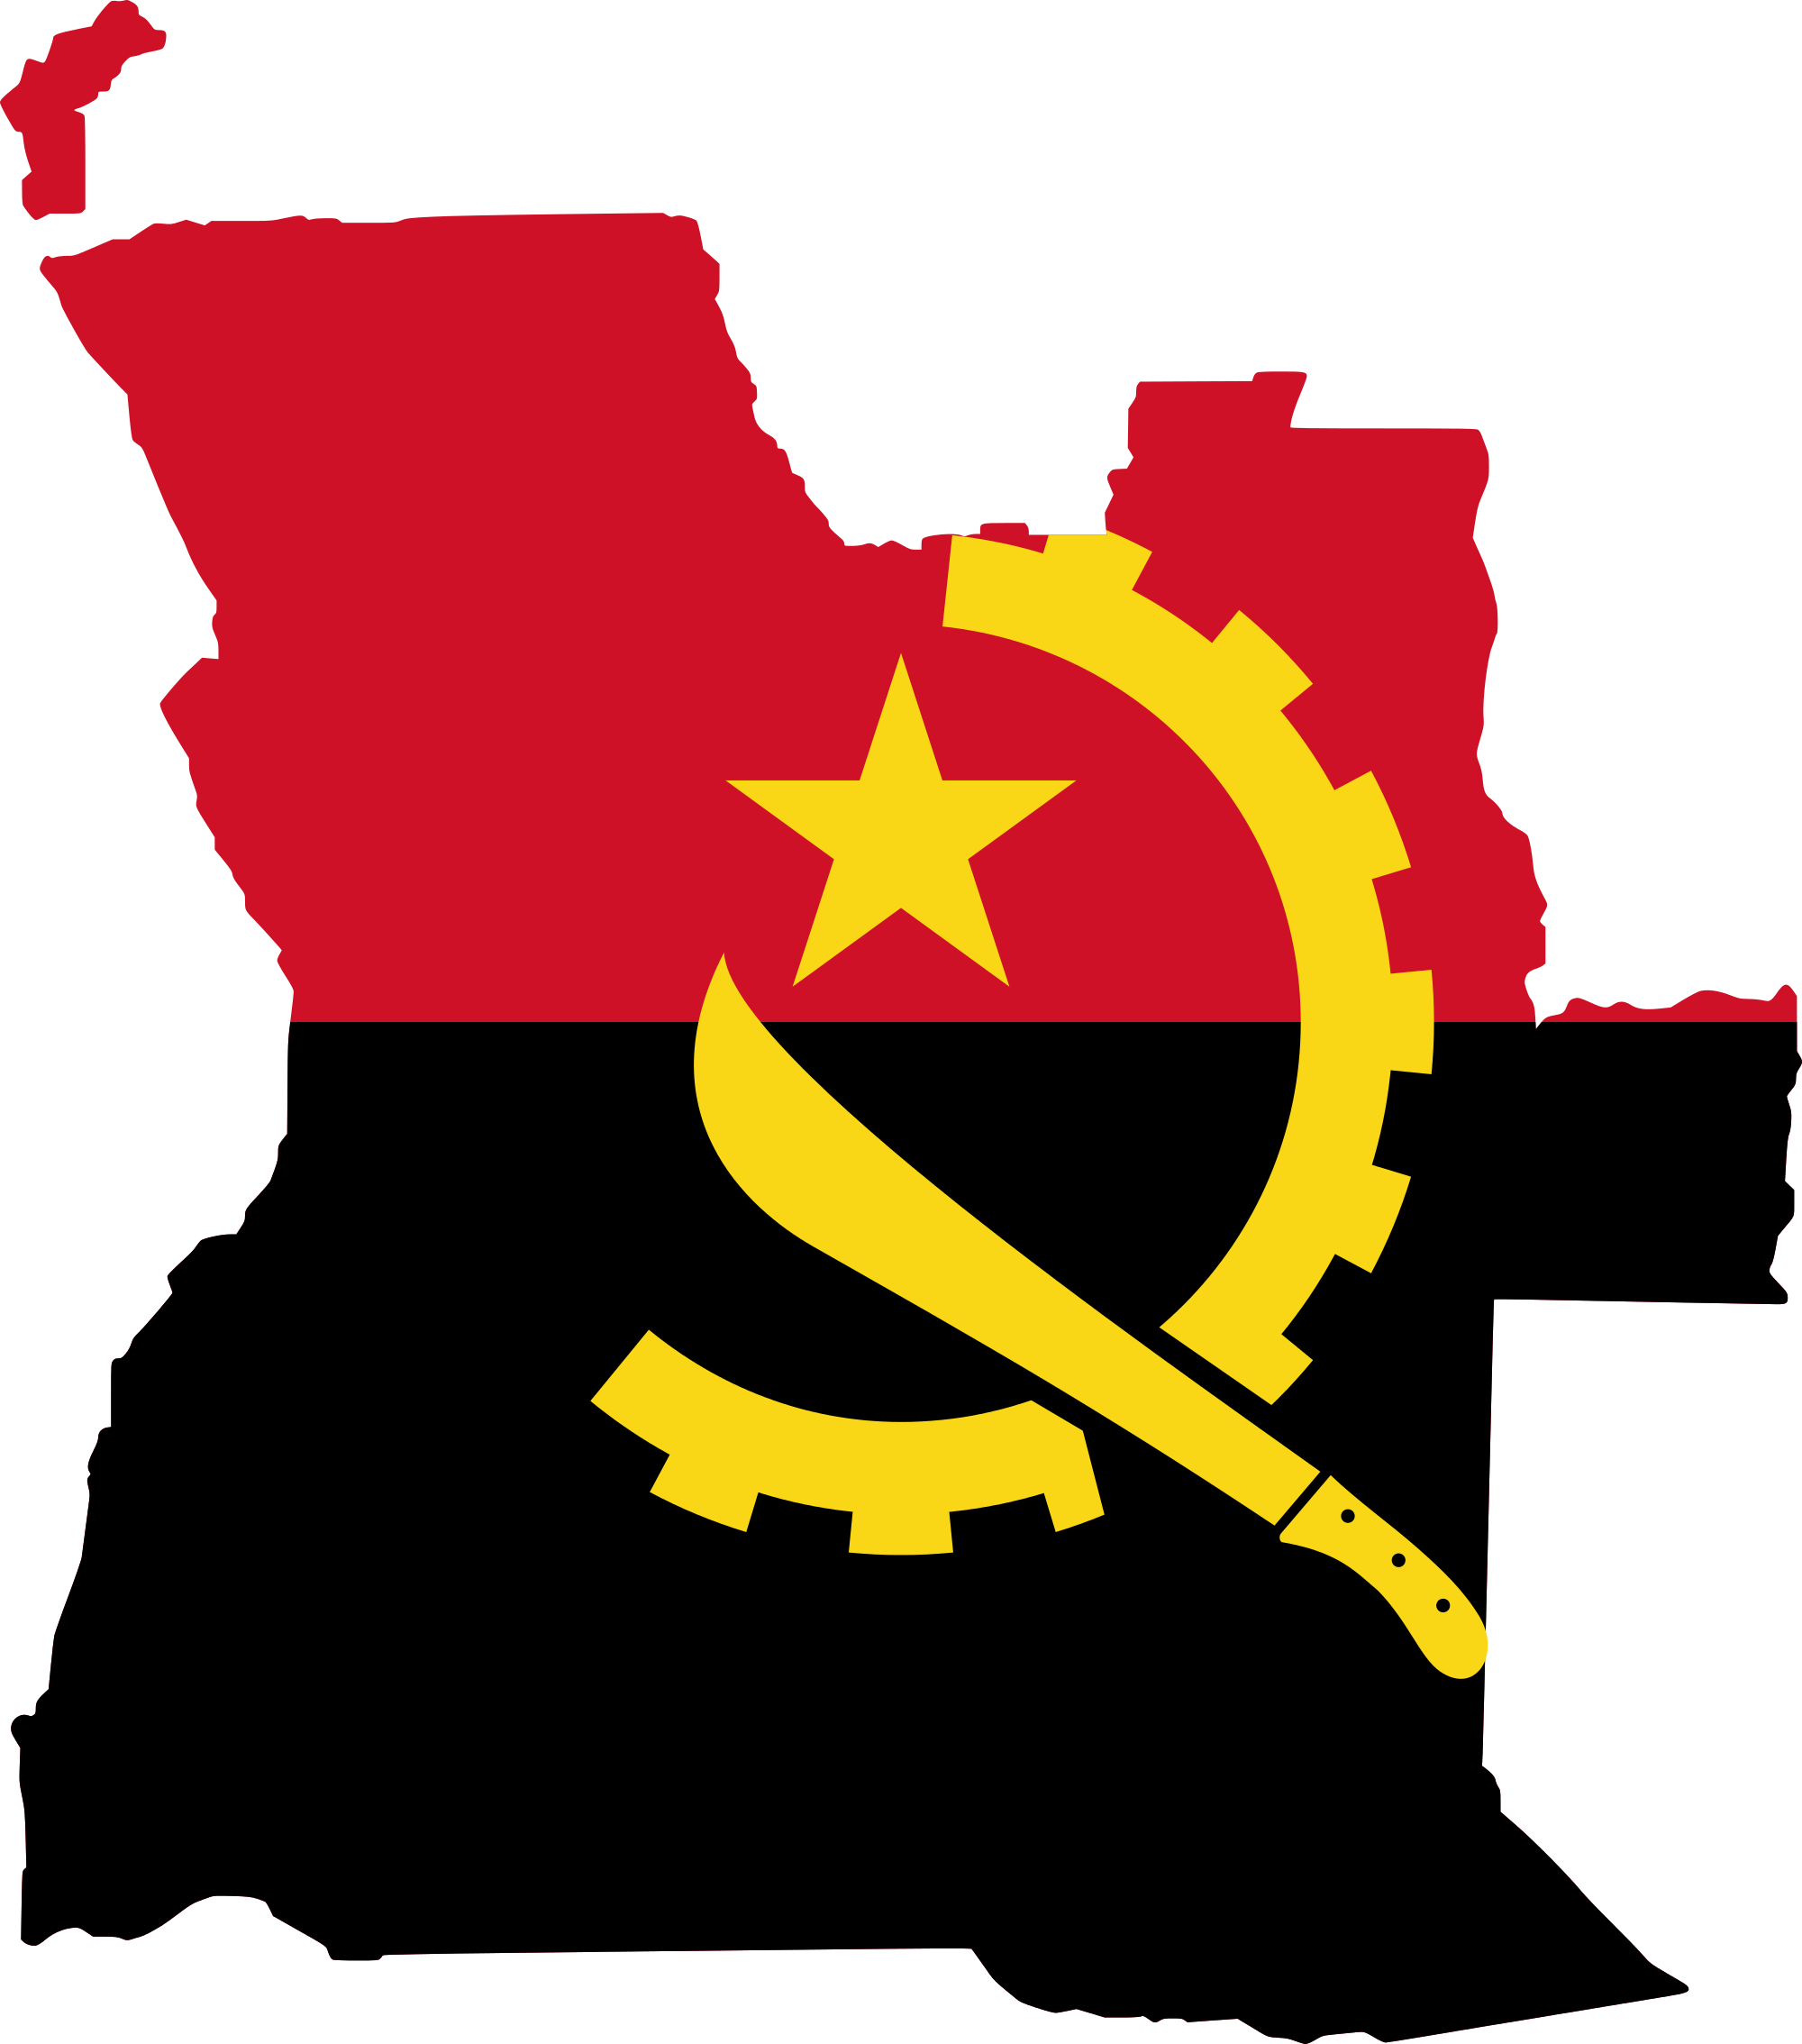 Image Angola Africa Flag With Map Of Svg - Escuela De Evangelizacion San Andres (2000x2268)